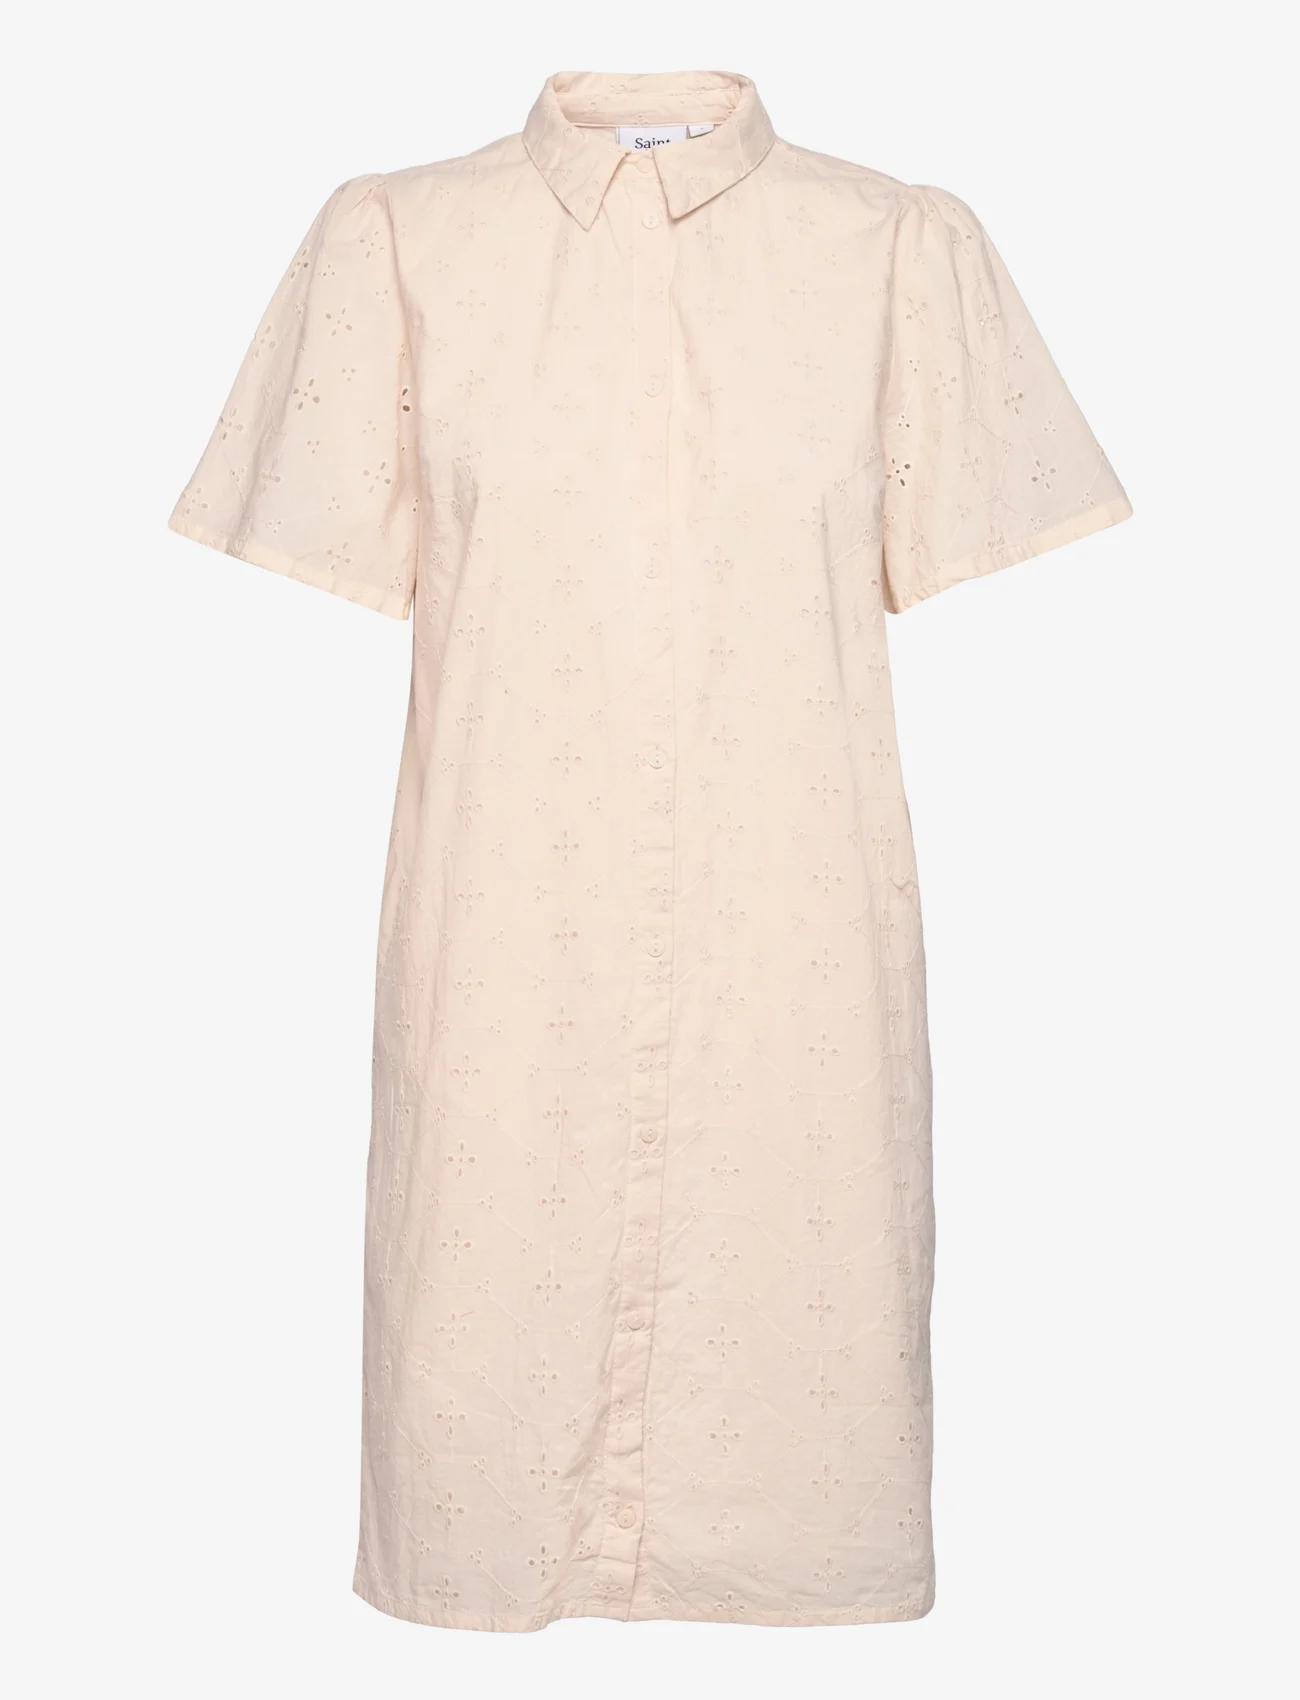 Saint Tropez - MargoSZ Dress - summer dresses - creme - 0